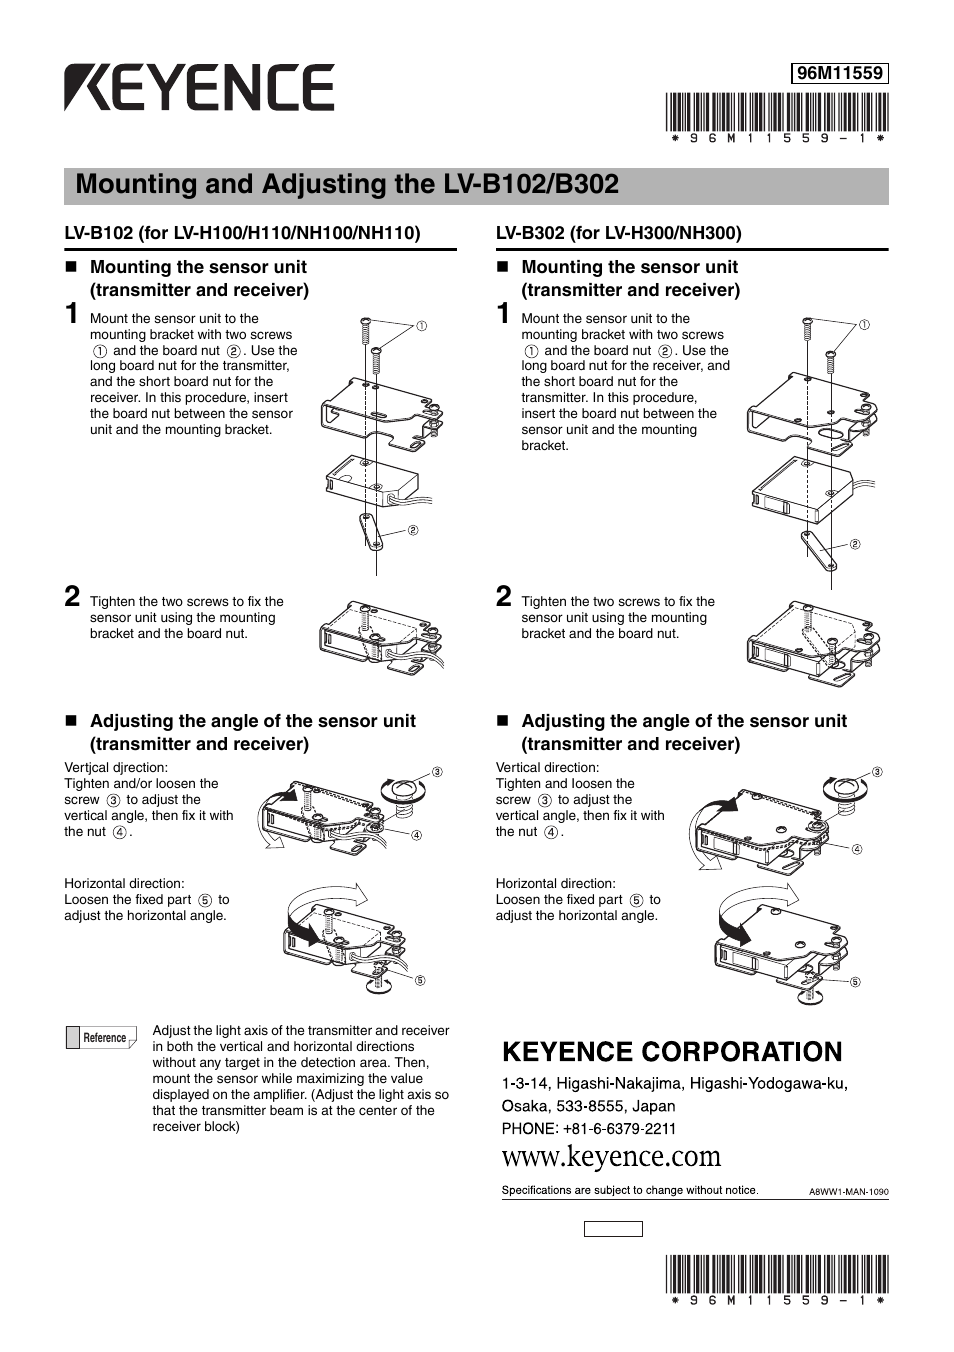 KEYENCE LV-B302 User Manual | 1 page | Also for: LV-B102